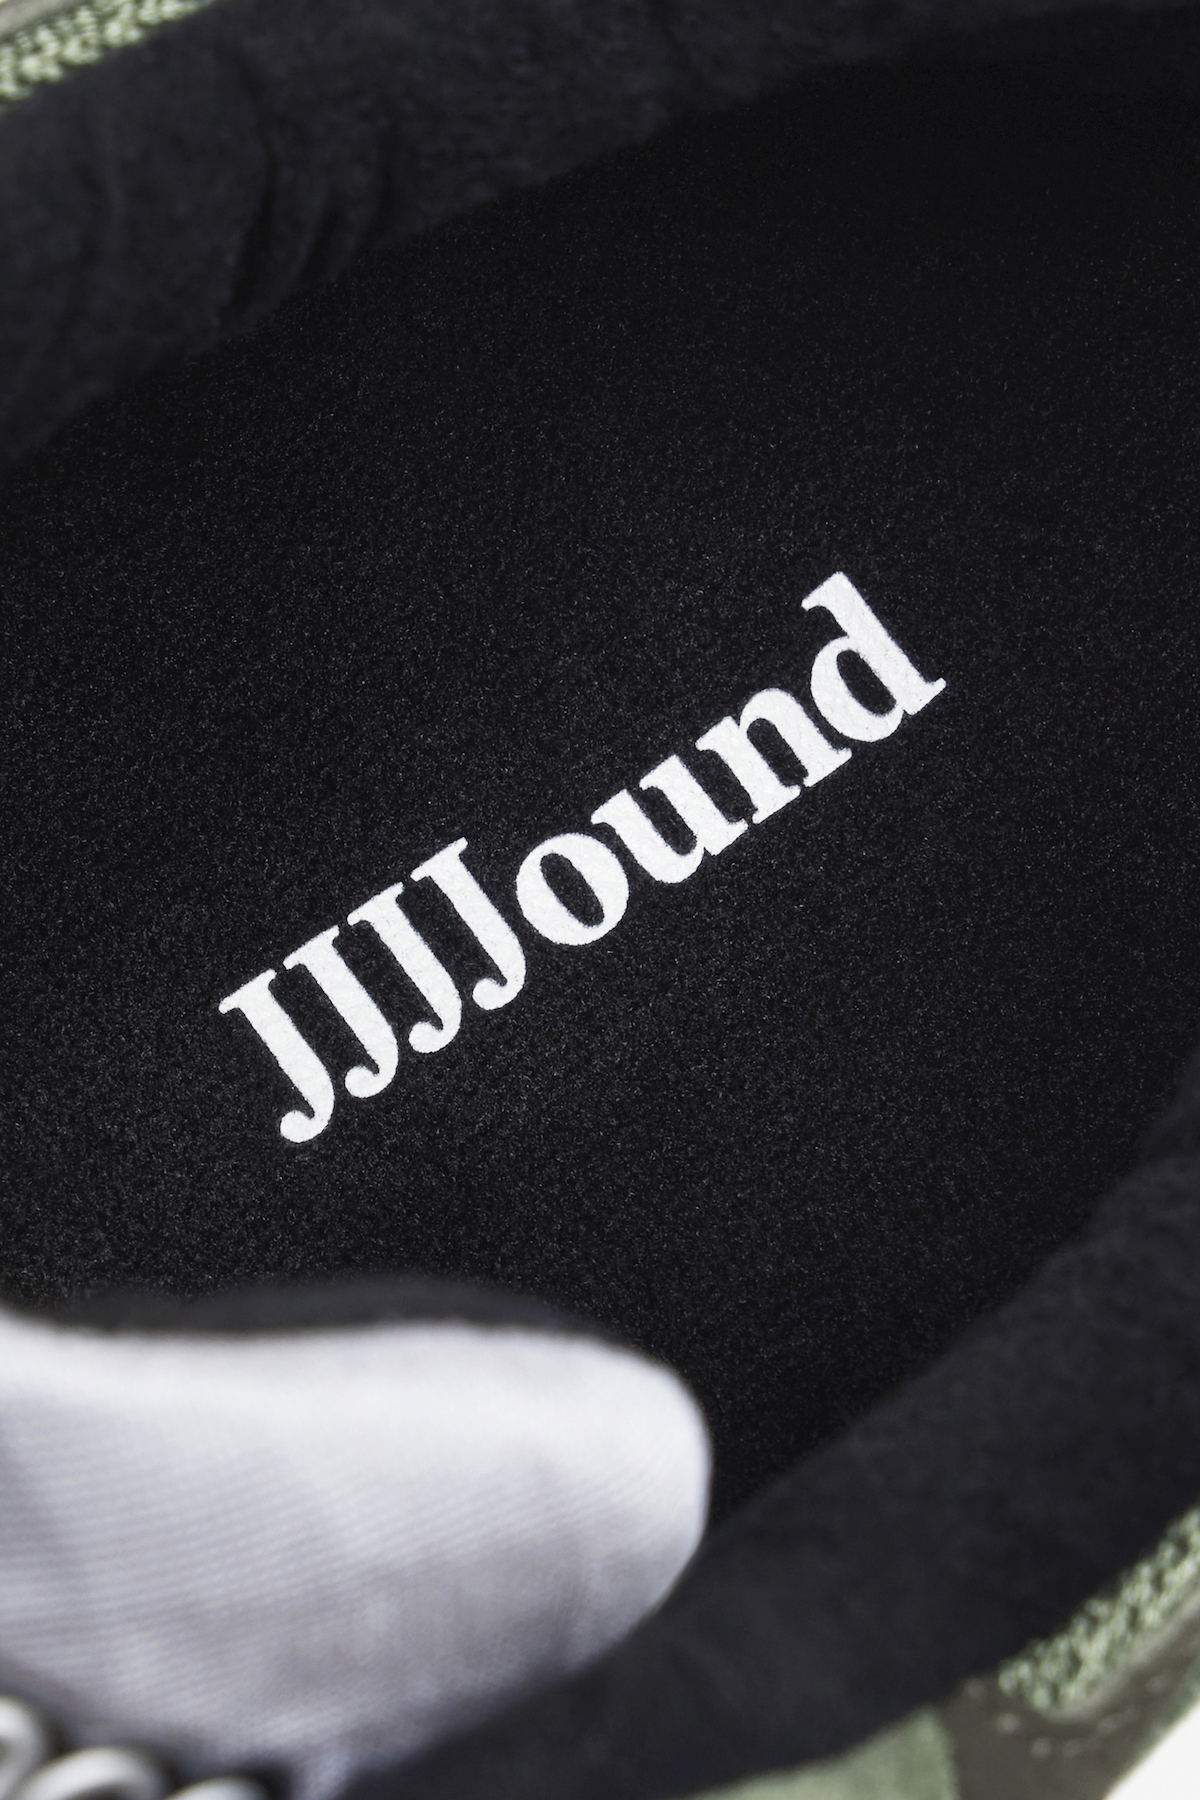 JJJJound New Balance 990v3 Olive M990JD3 Release Date